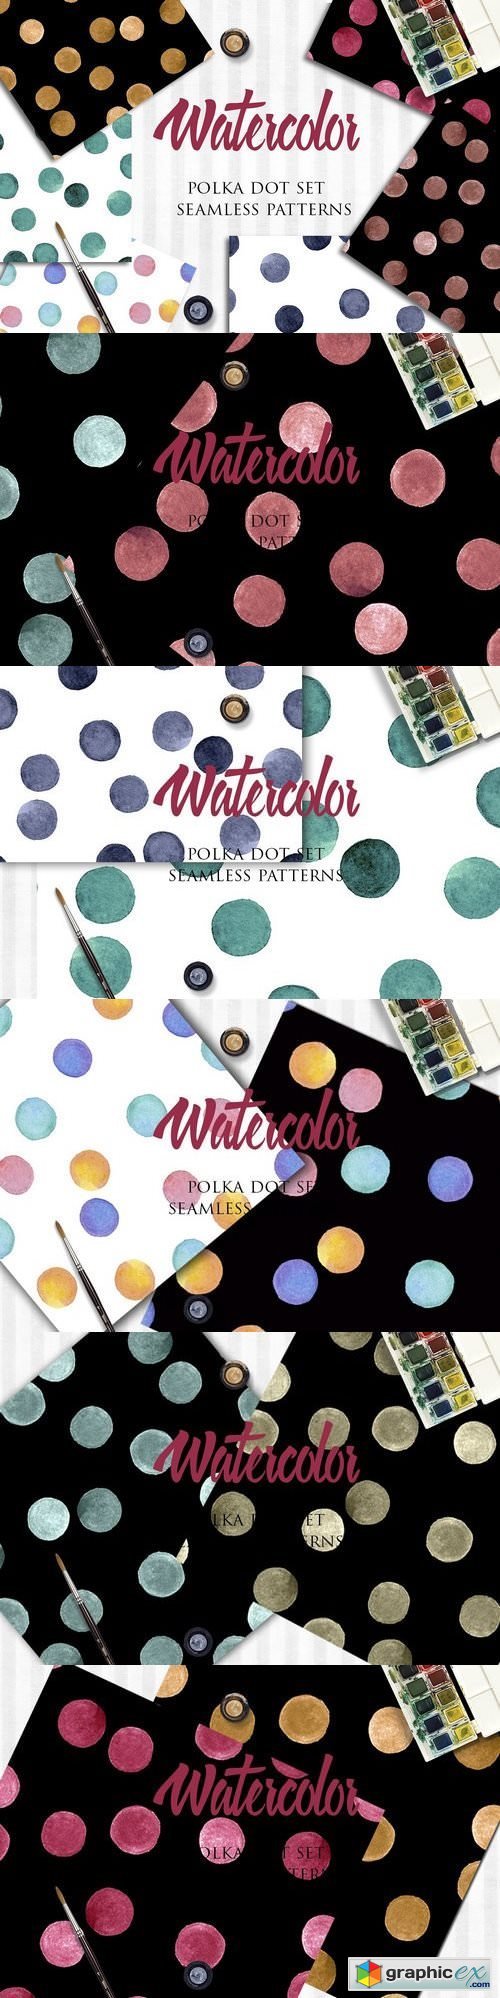 Watercolor polka dot patterns set